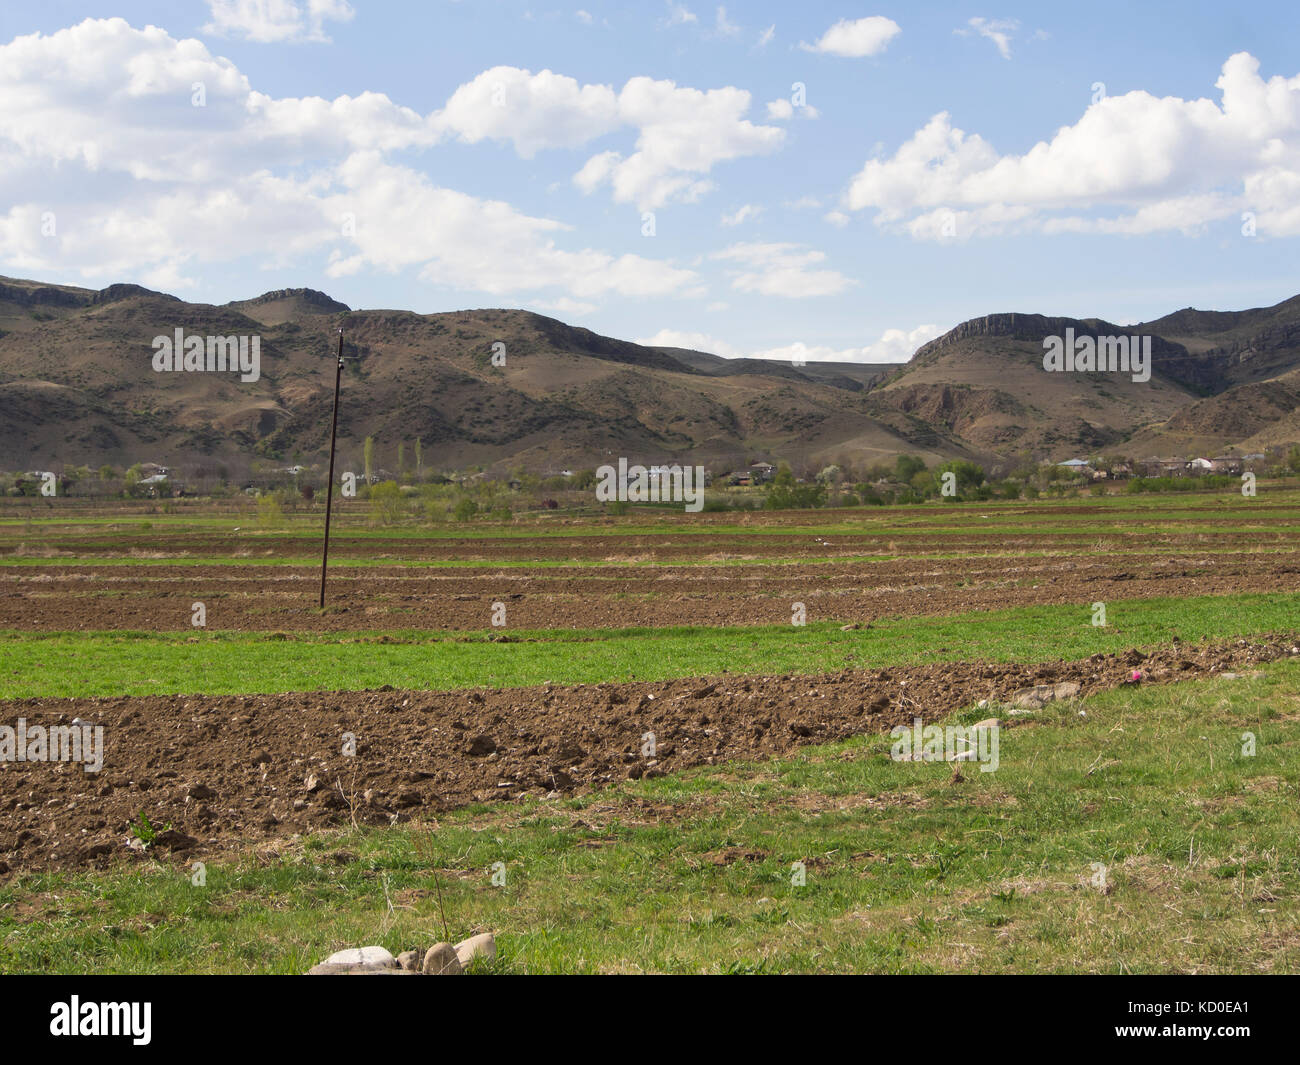 Landscapes and farmland surrounding the small village of Rustavi, Samtskhe-Javakheti province, southern Georgia Stock Photo